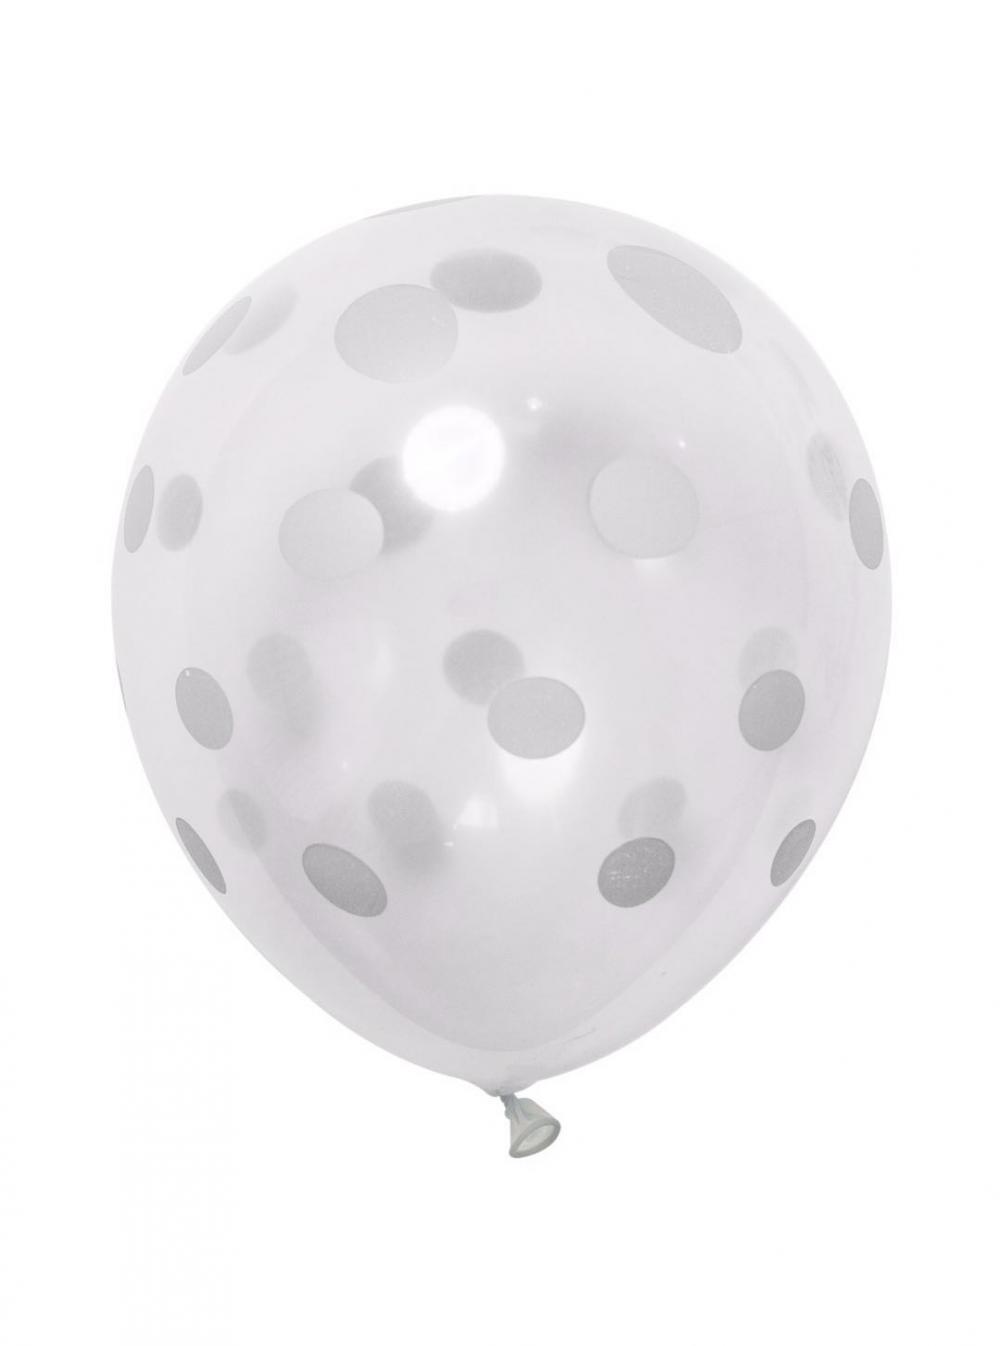 12 Inch Standard Polka Dot Balloons Clear Balloon White Dot (100PCS)